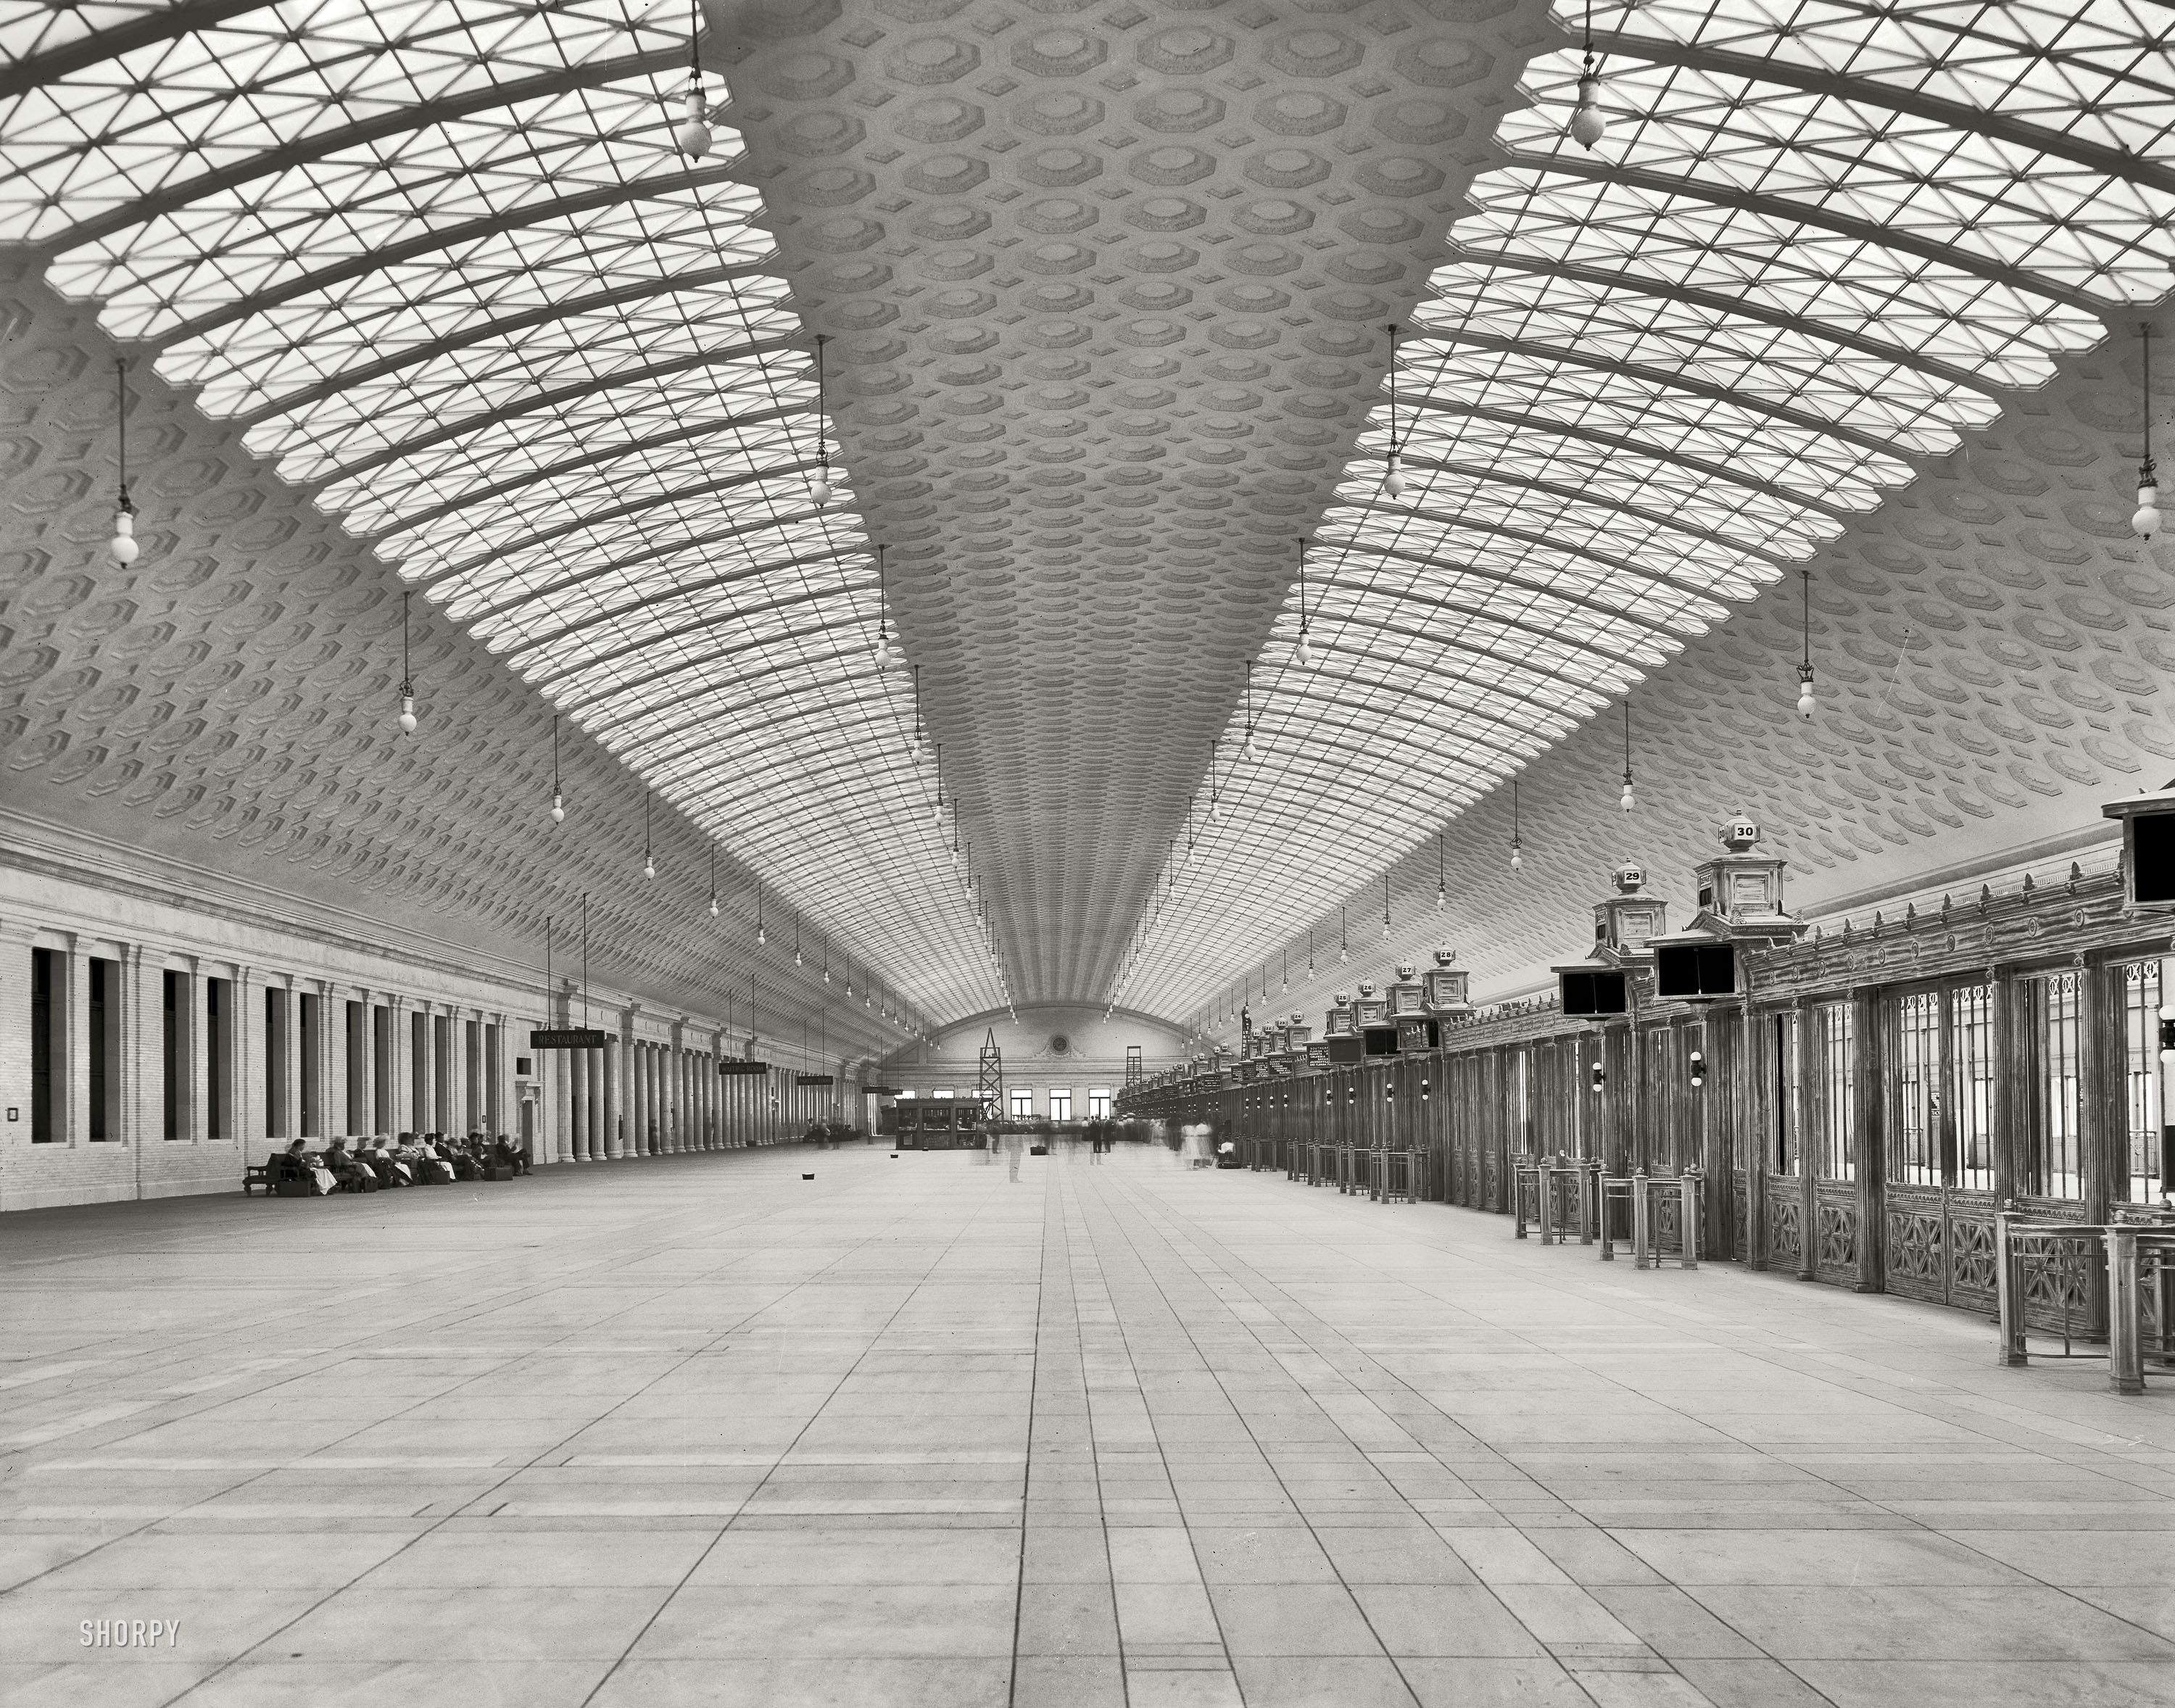 Circa 1910. "Train concourse, Union Station, Washington, D.C." 8x10 inch dry plate glass negative, Detroit Publishing Company. View full size.